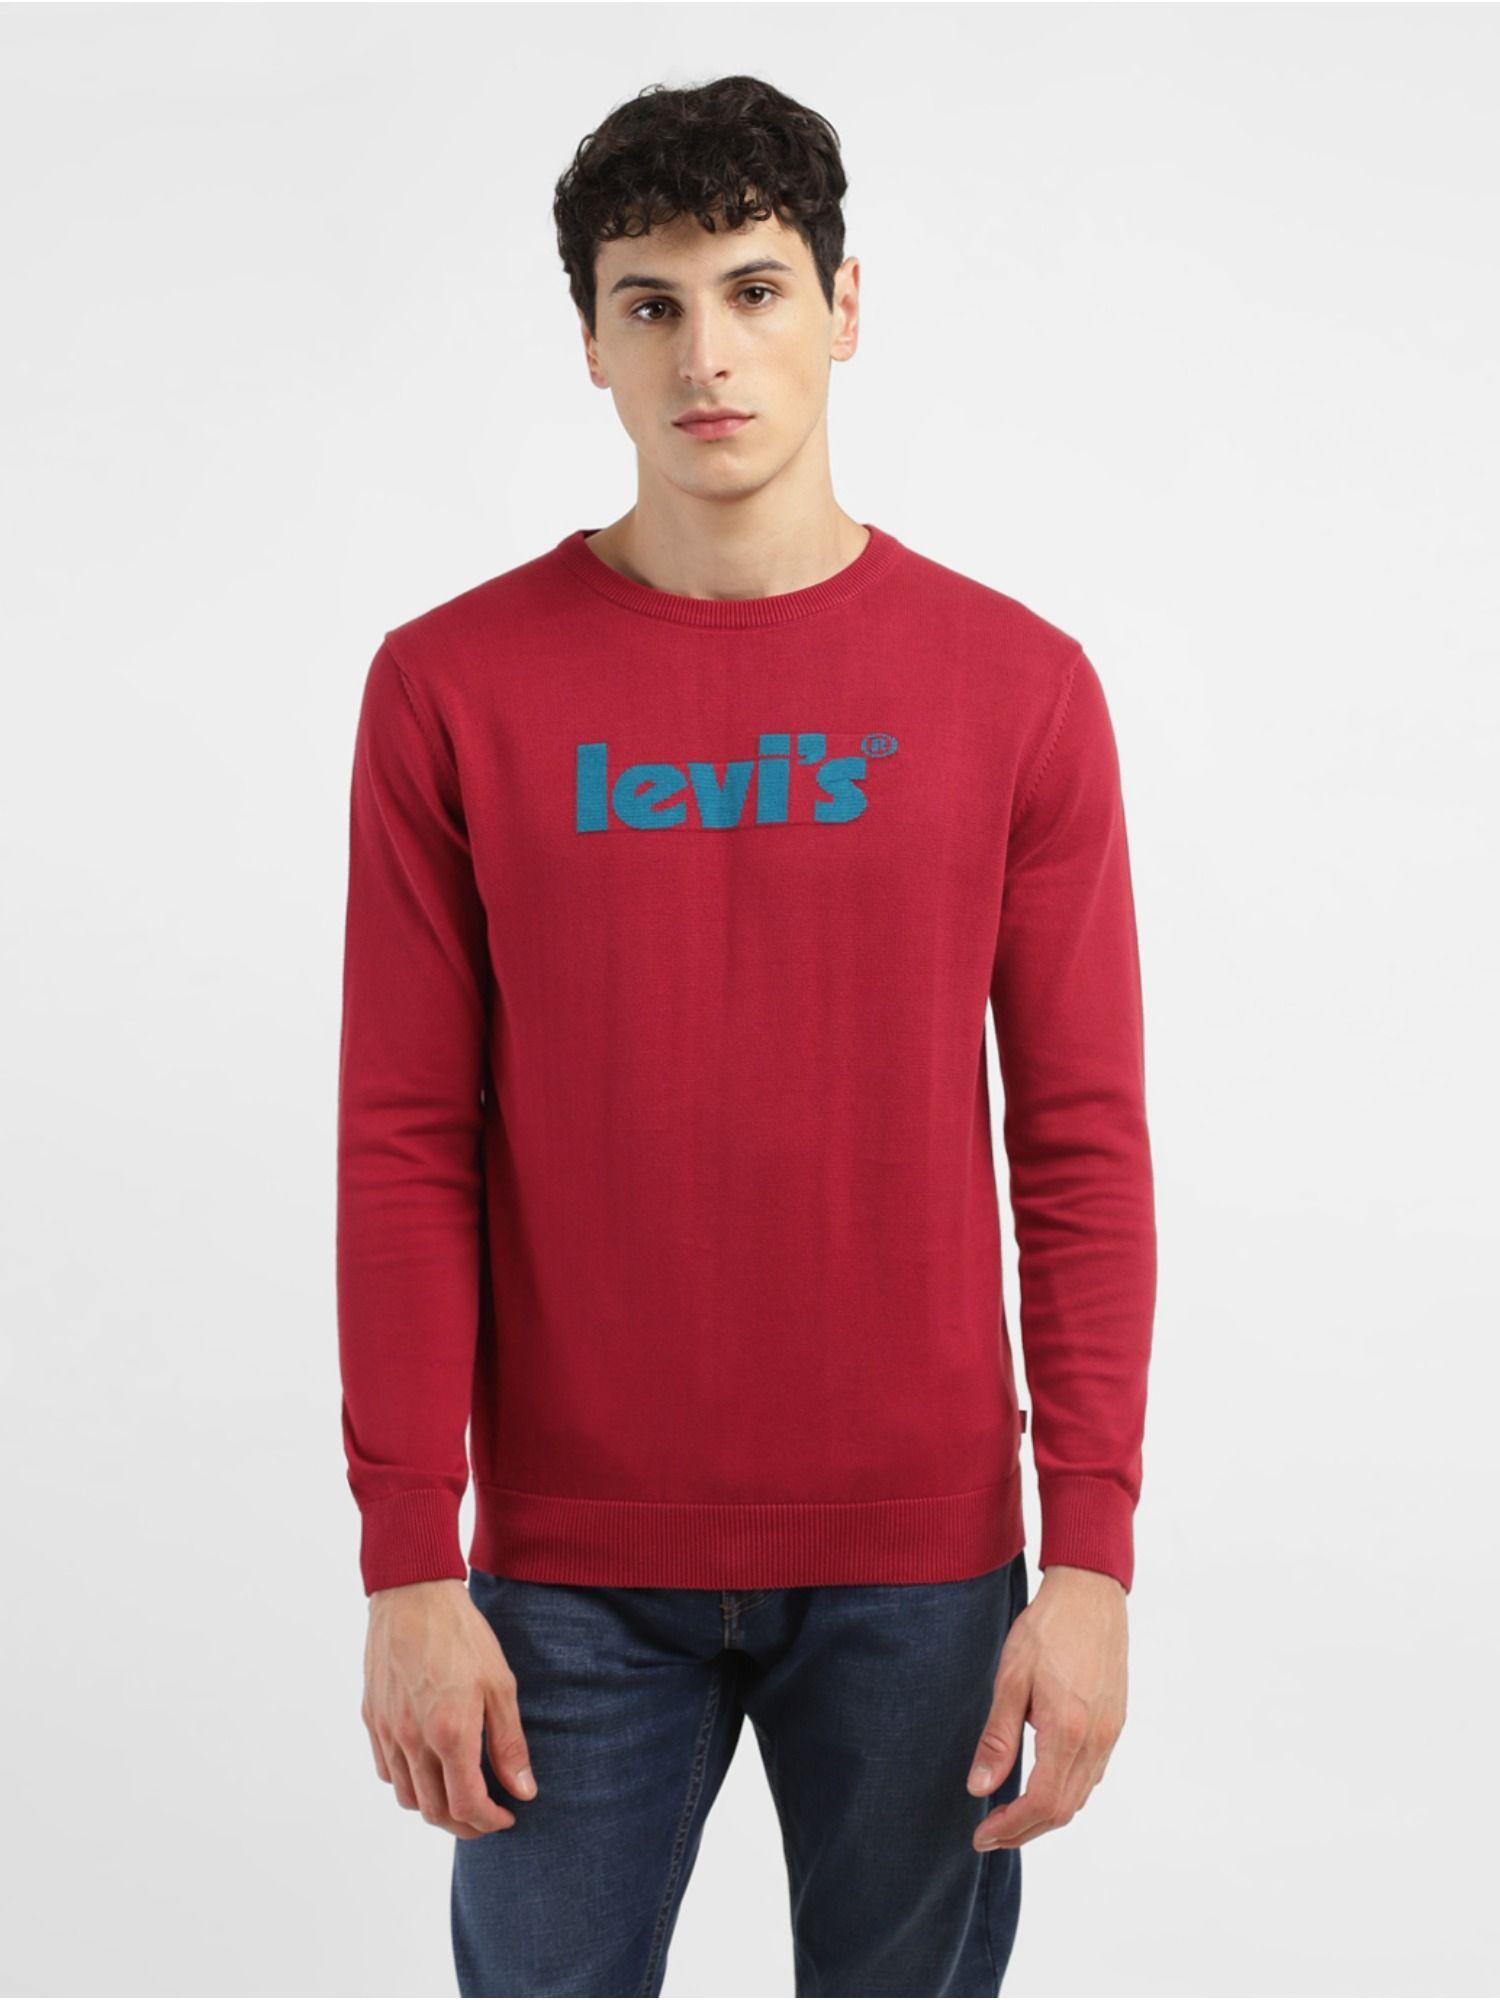 men's-brand-logo-red-crew-neck-sweater